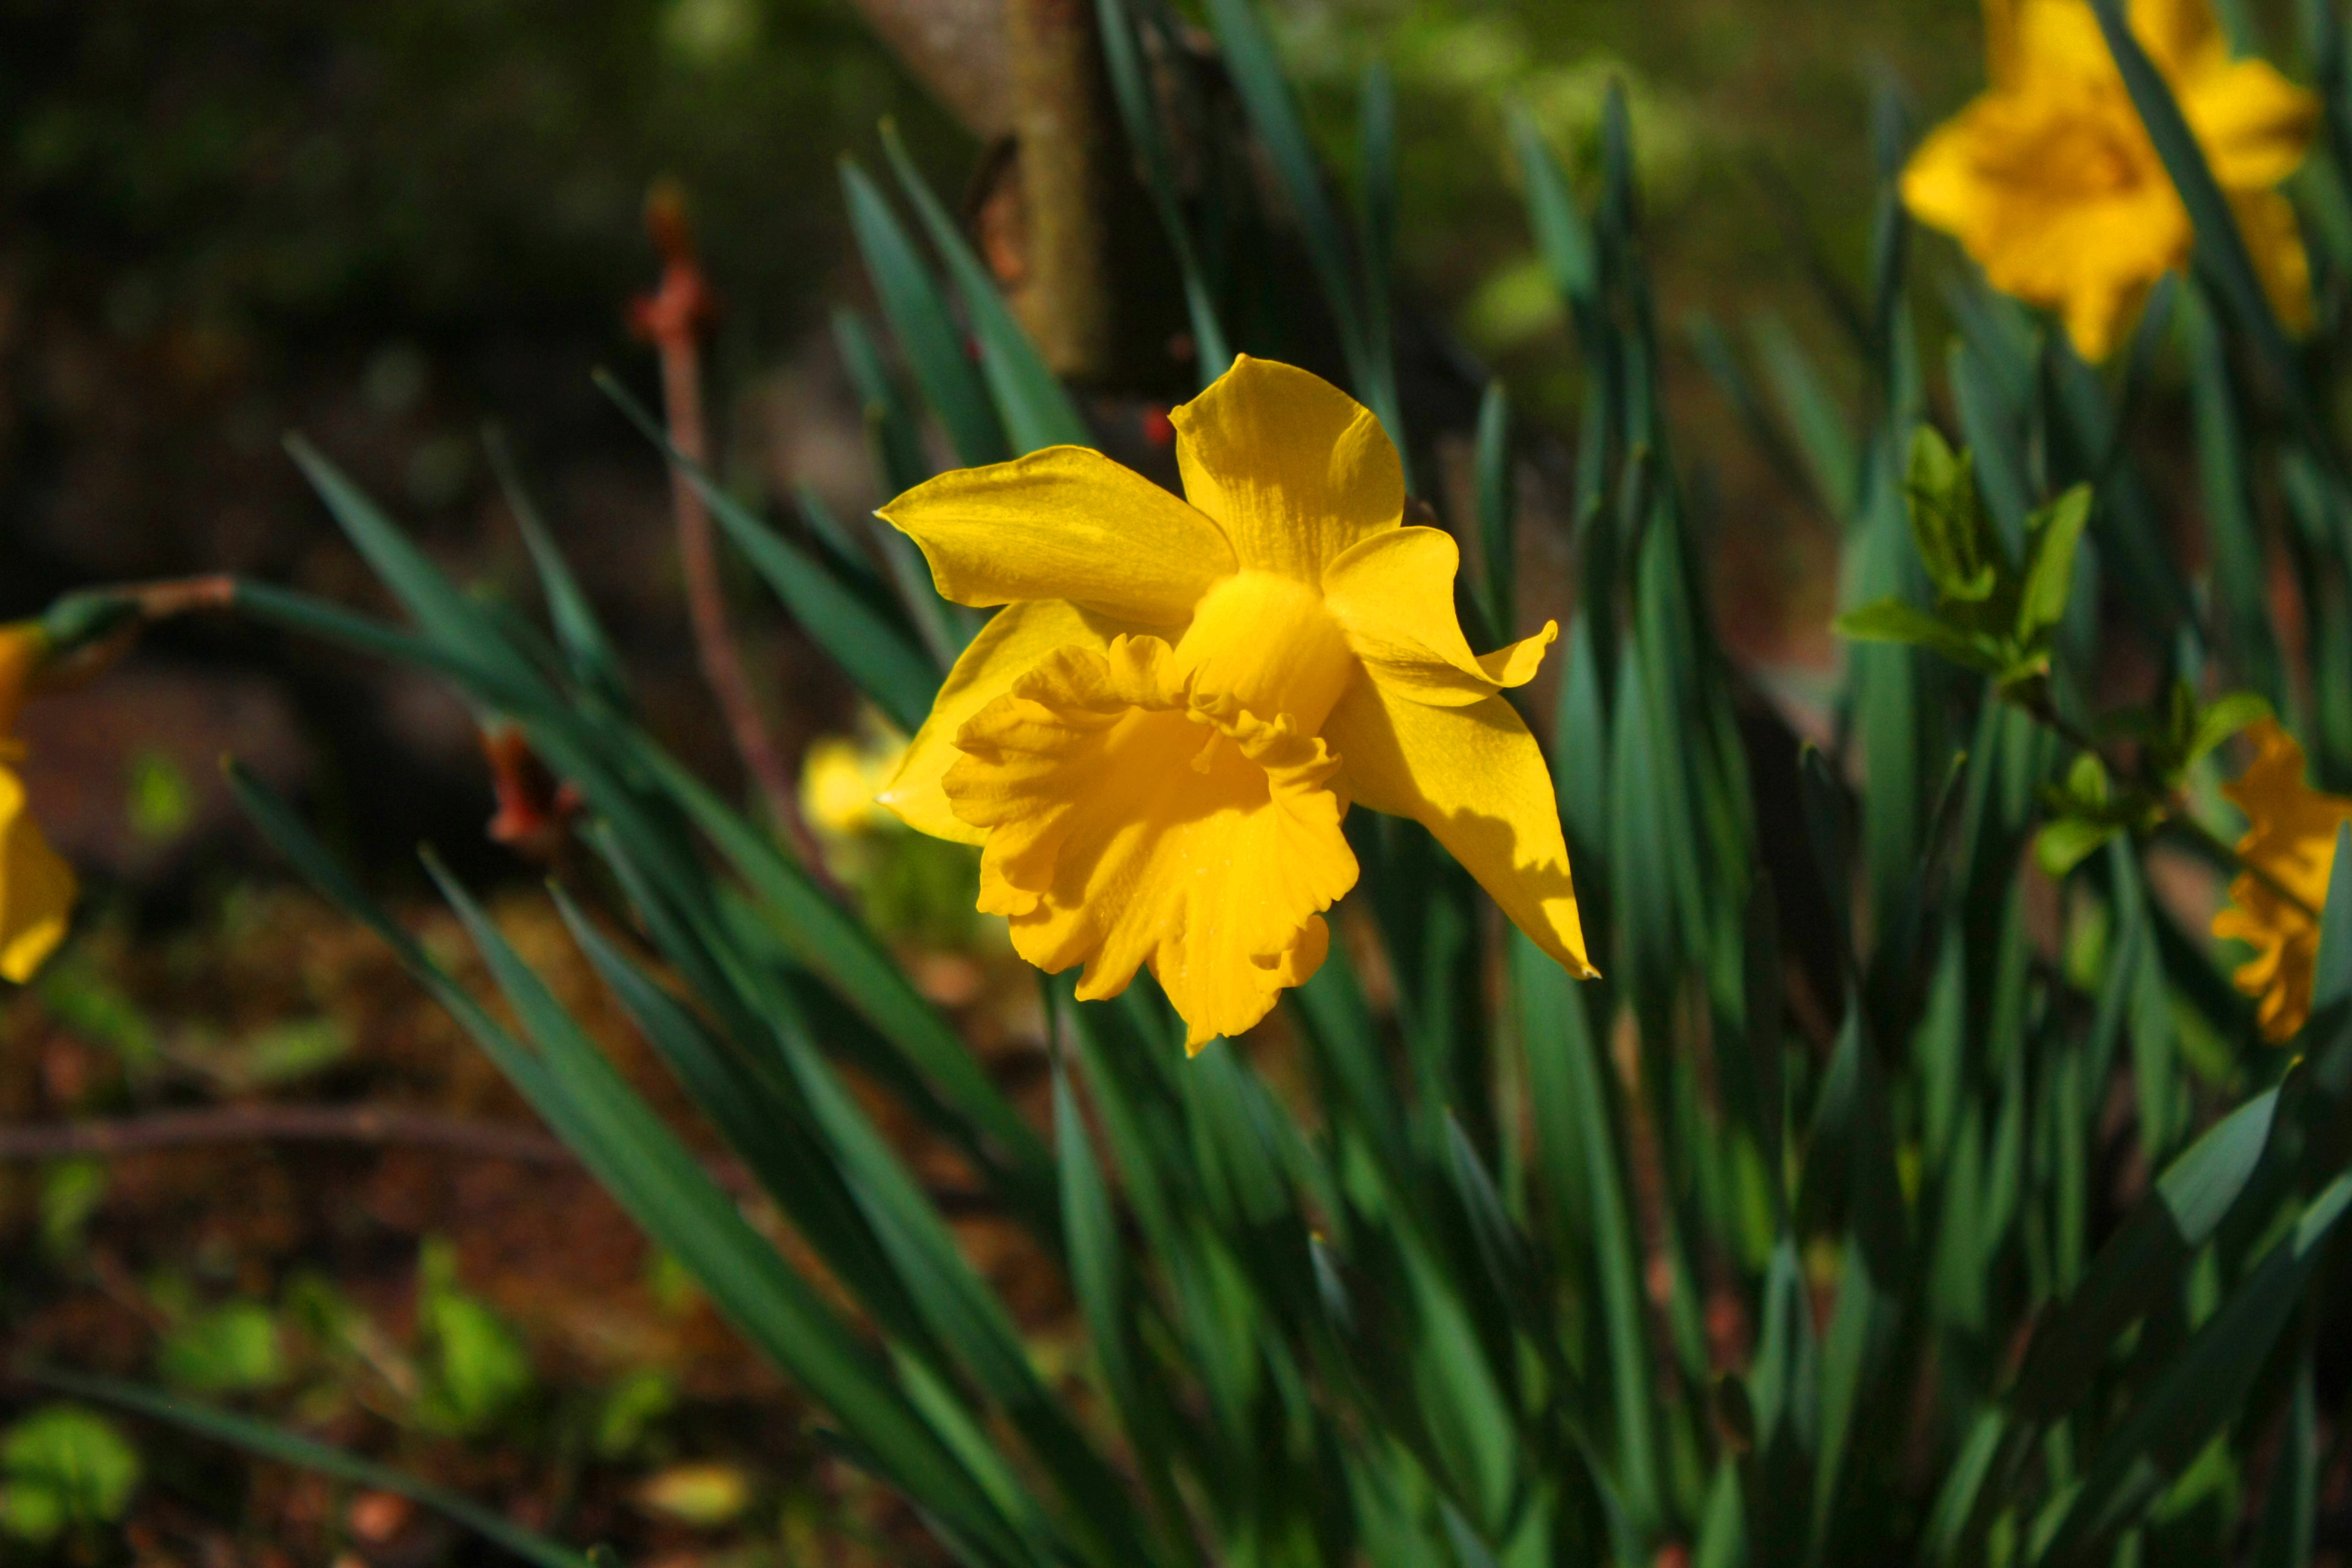 File:Narcissus yellow.JPG - Wikimedia Commons